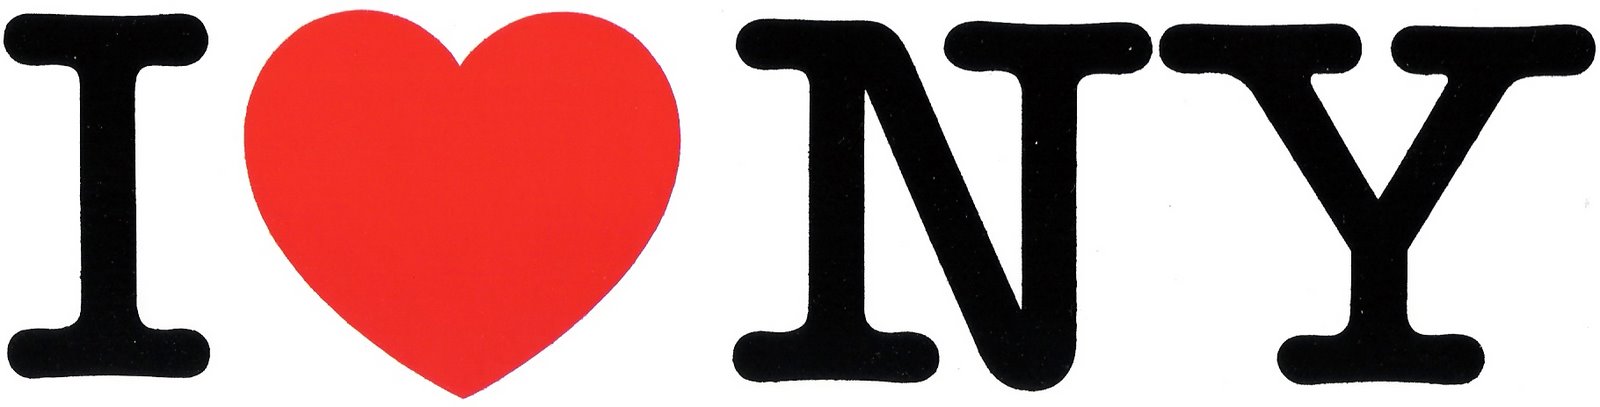 bruno santini: I Love NY Logo